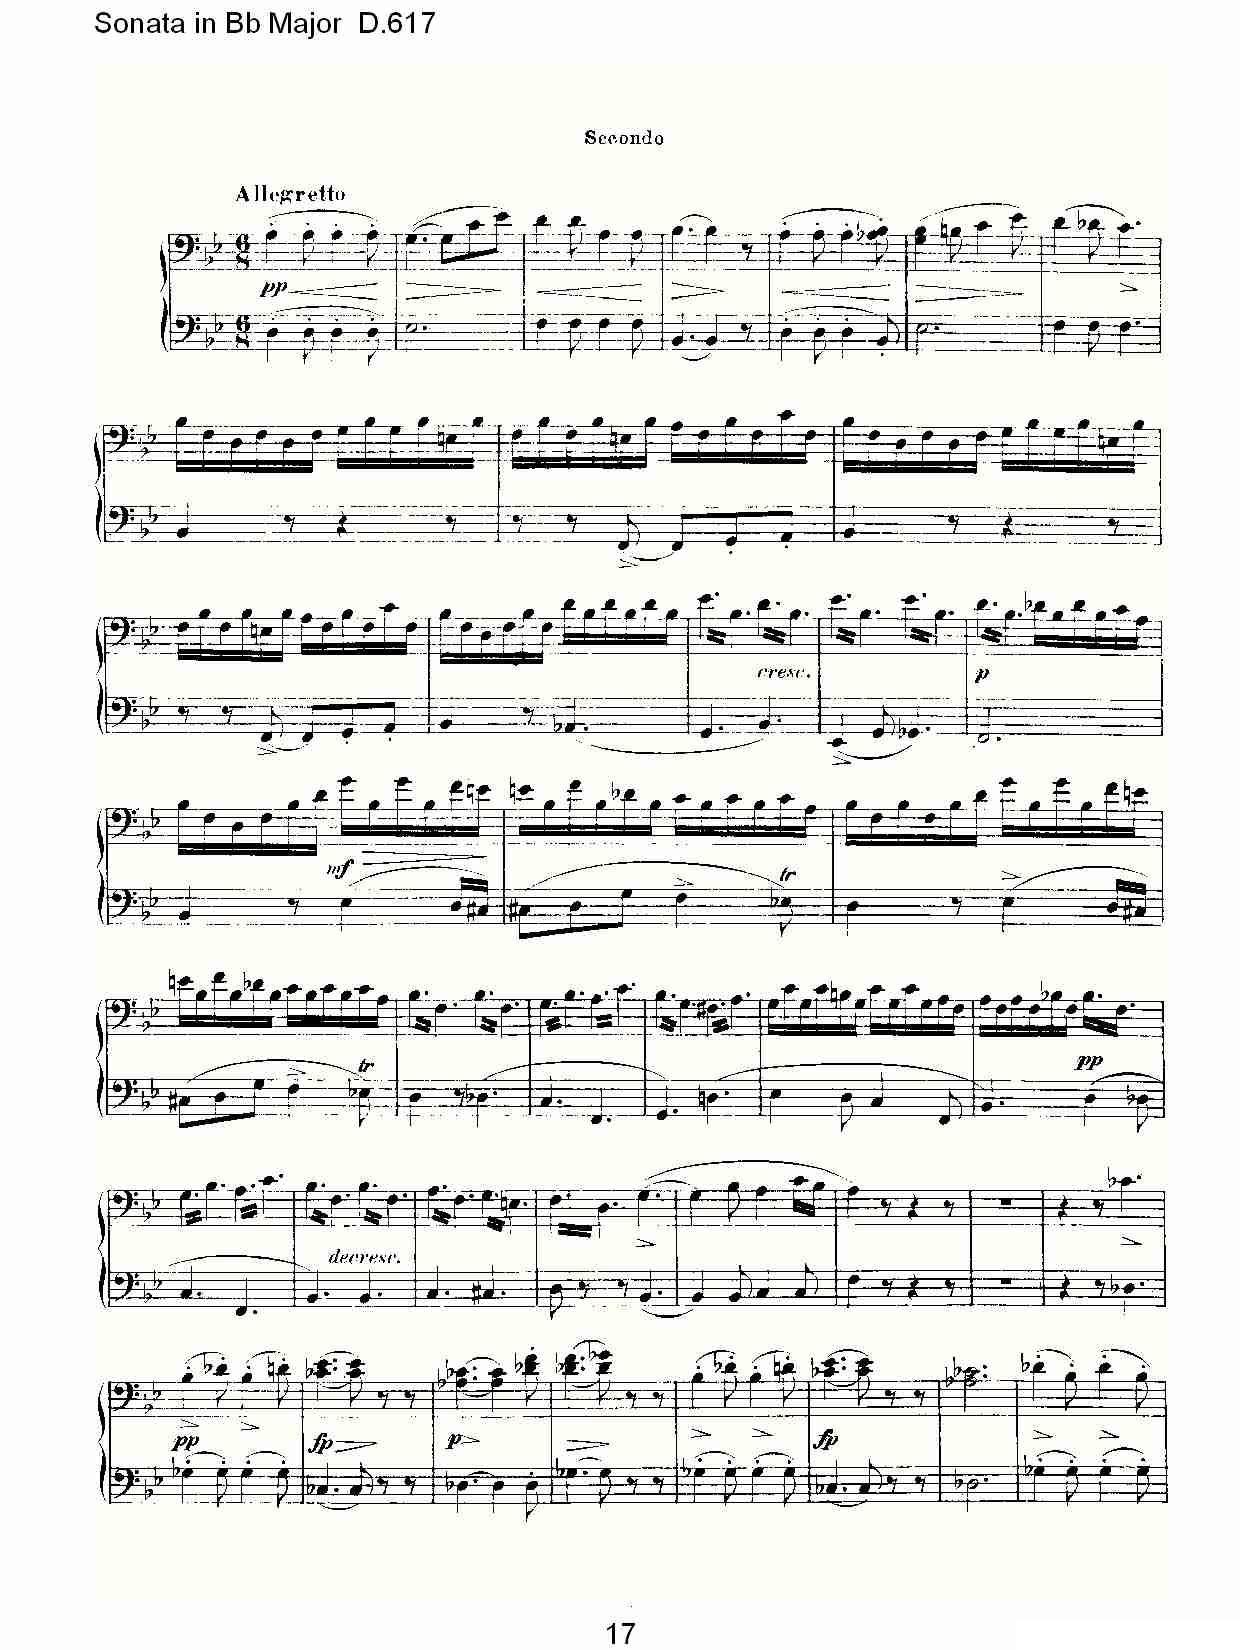 Sonata in Bb Major D.617（Bb大调奏鸣曲 D.617）钢琴曲谱（图17）